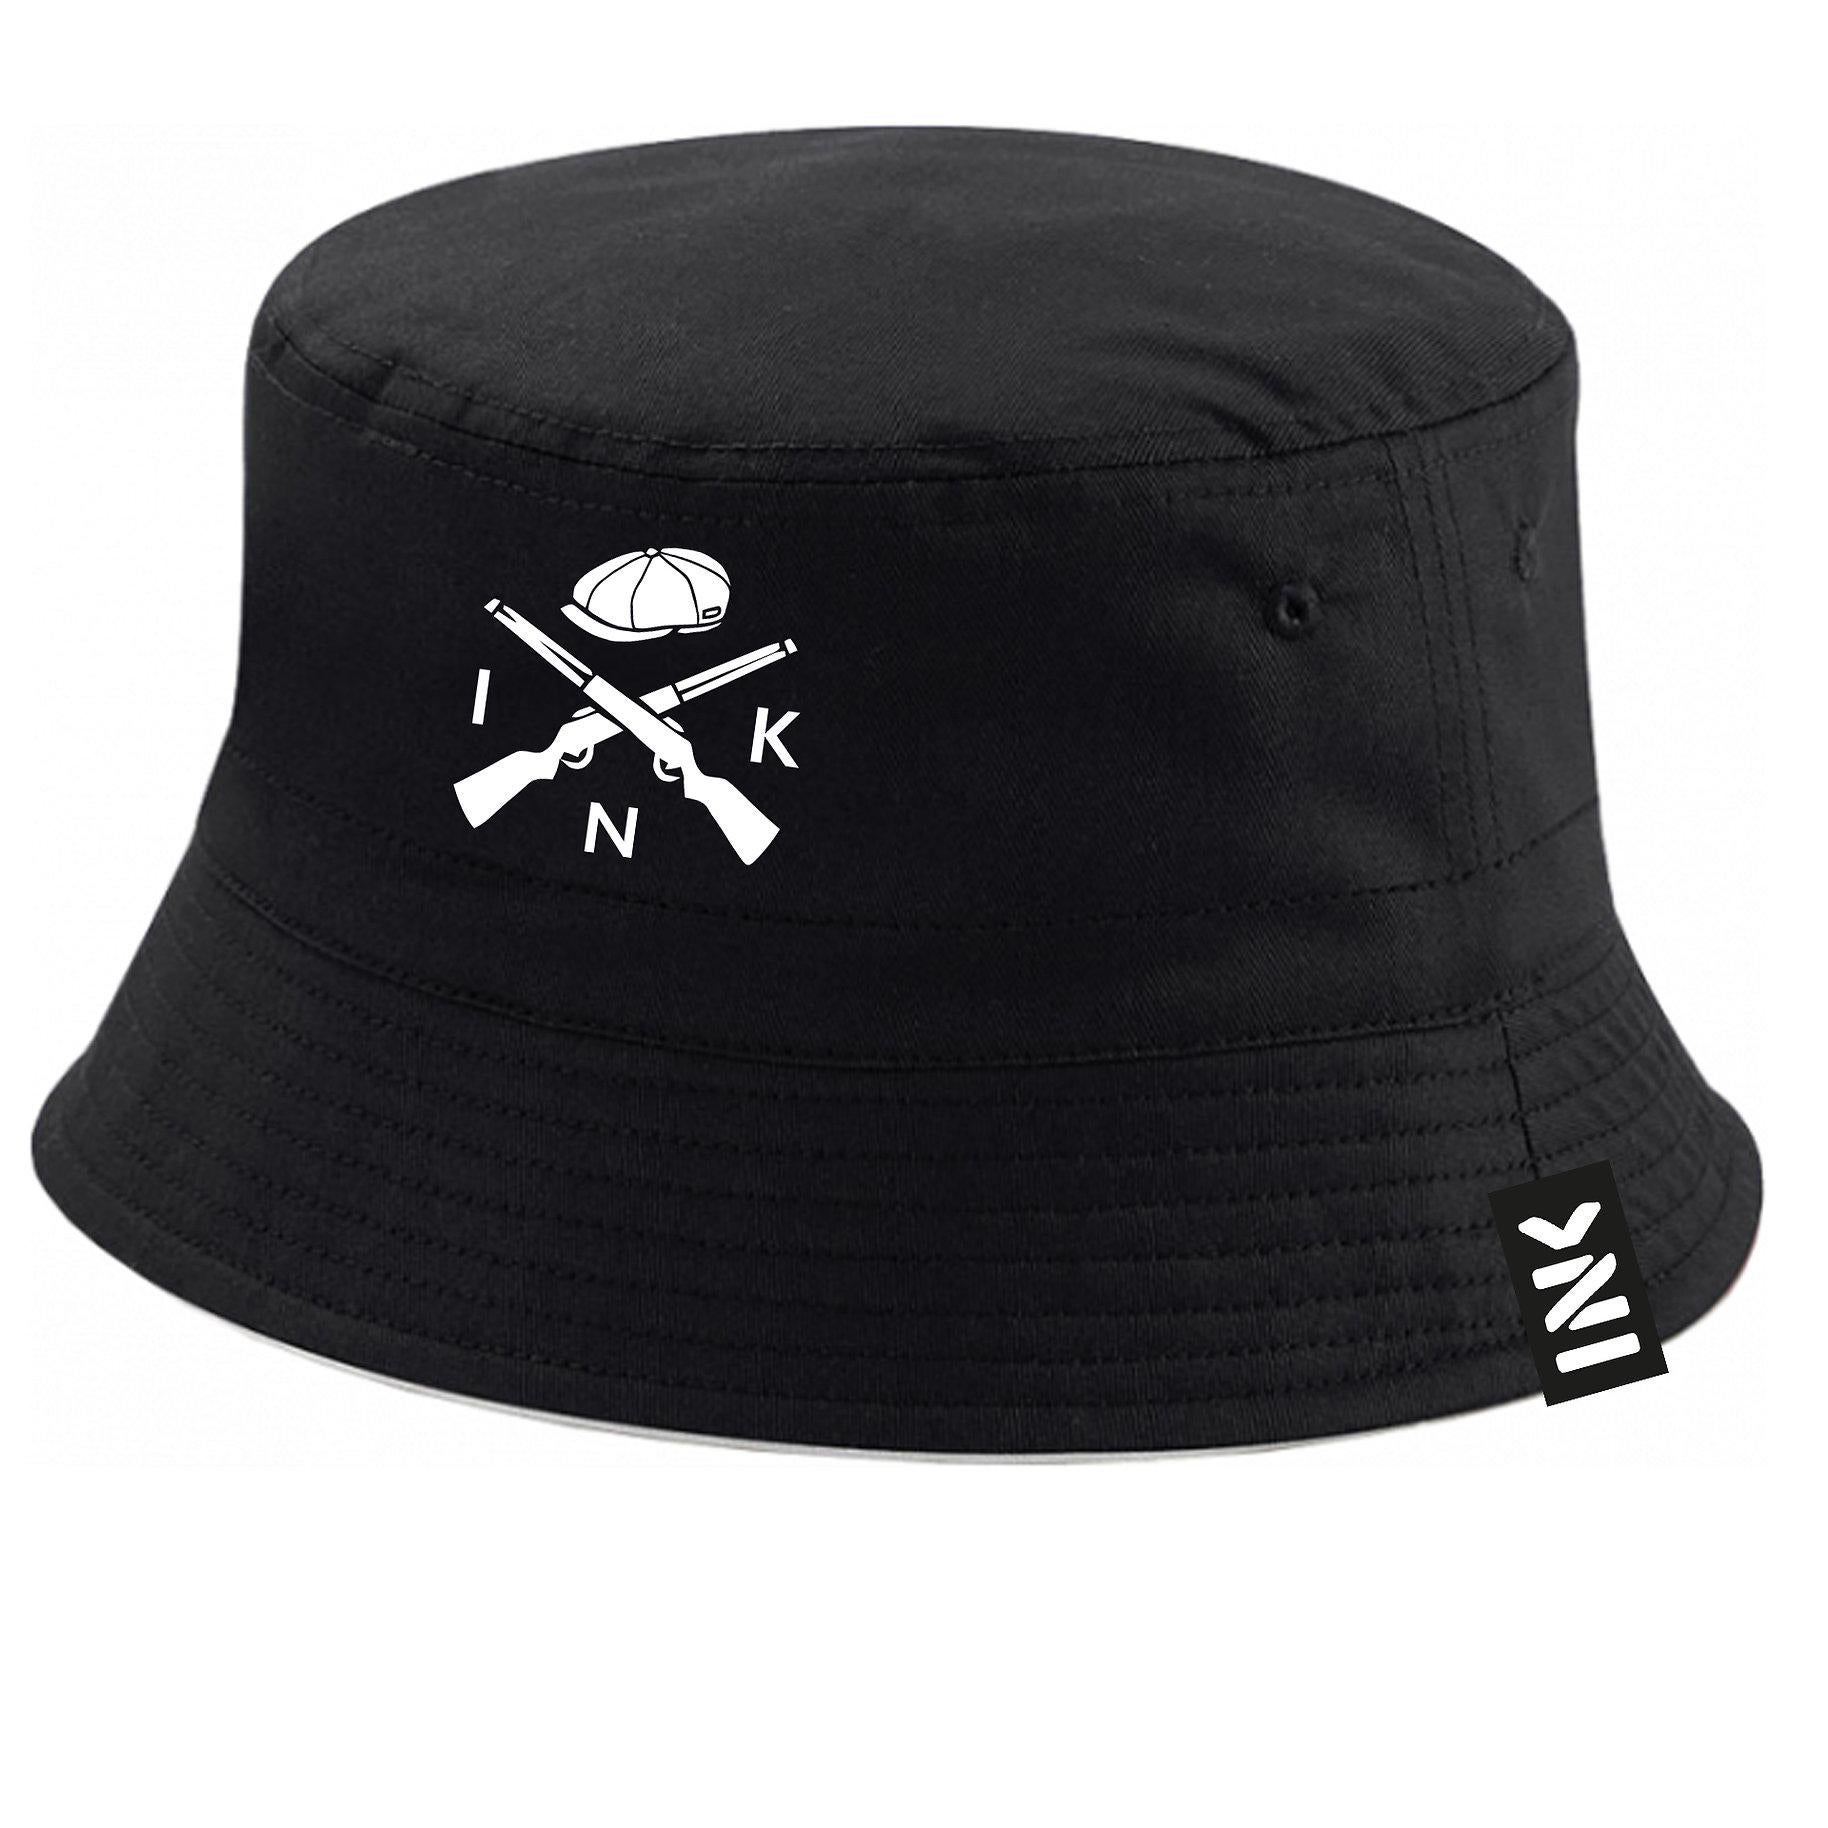 Black hat - cap NWOT 1